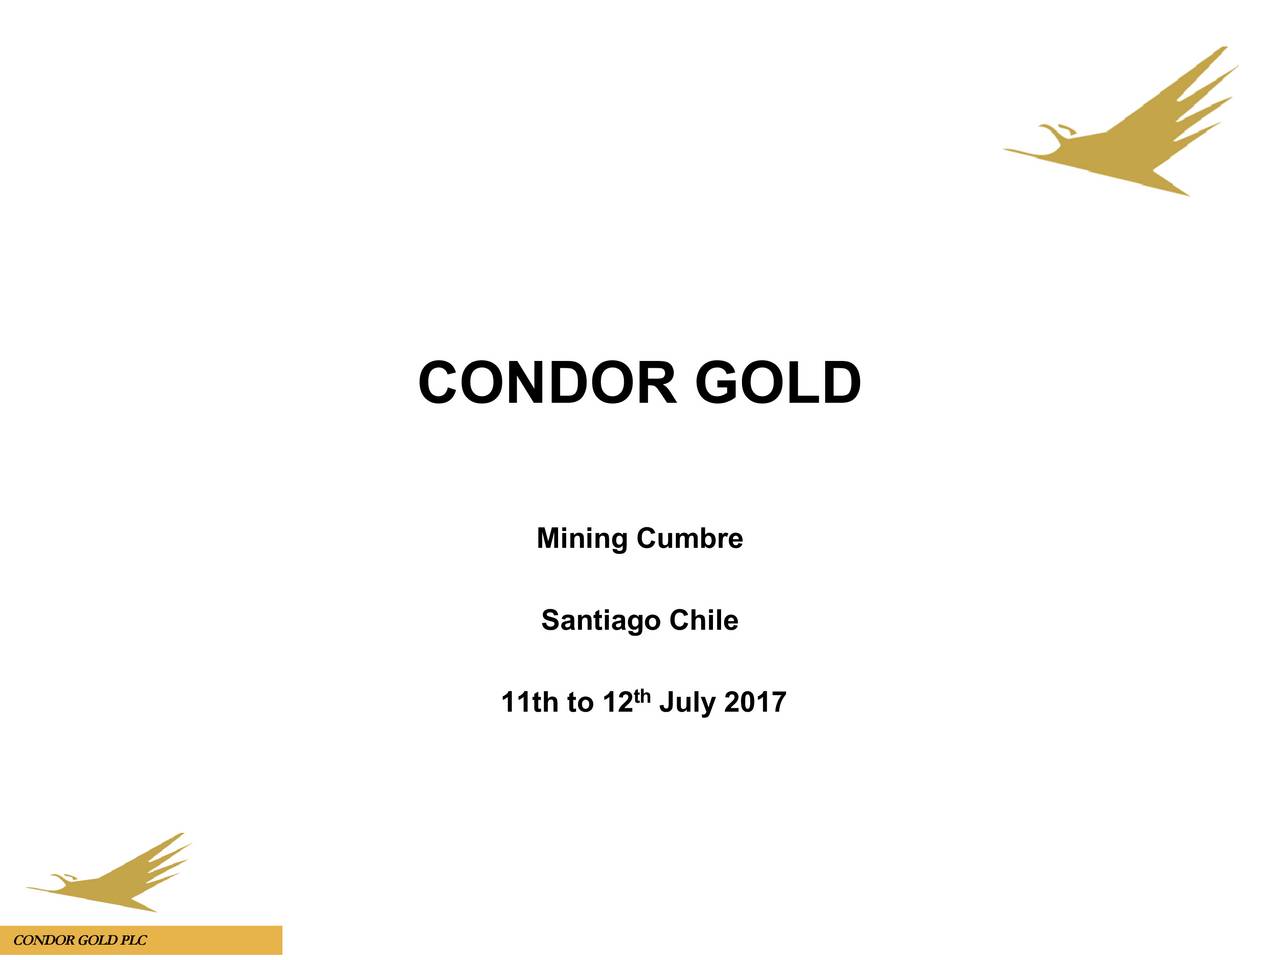  CONDOR GOLD